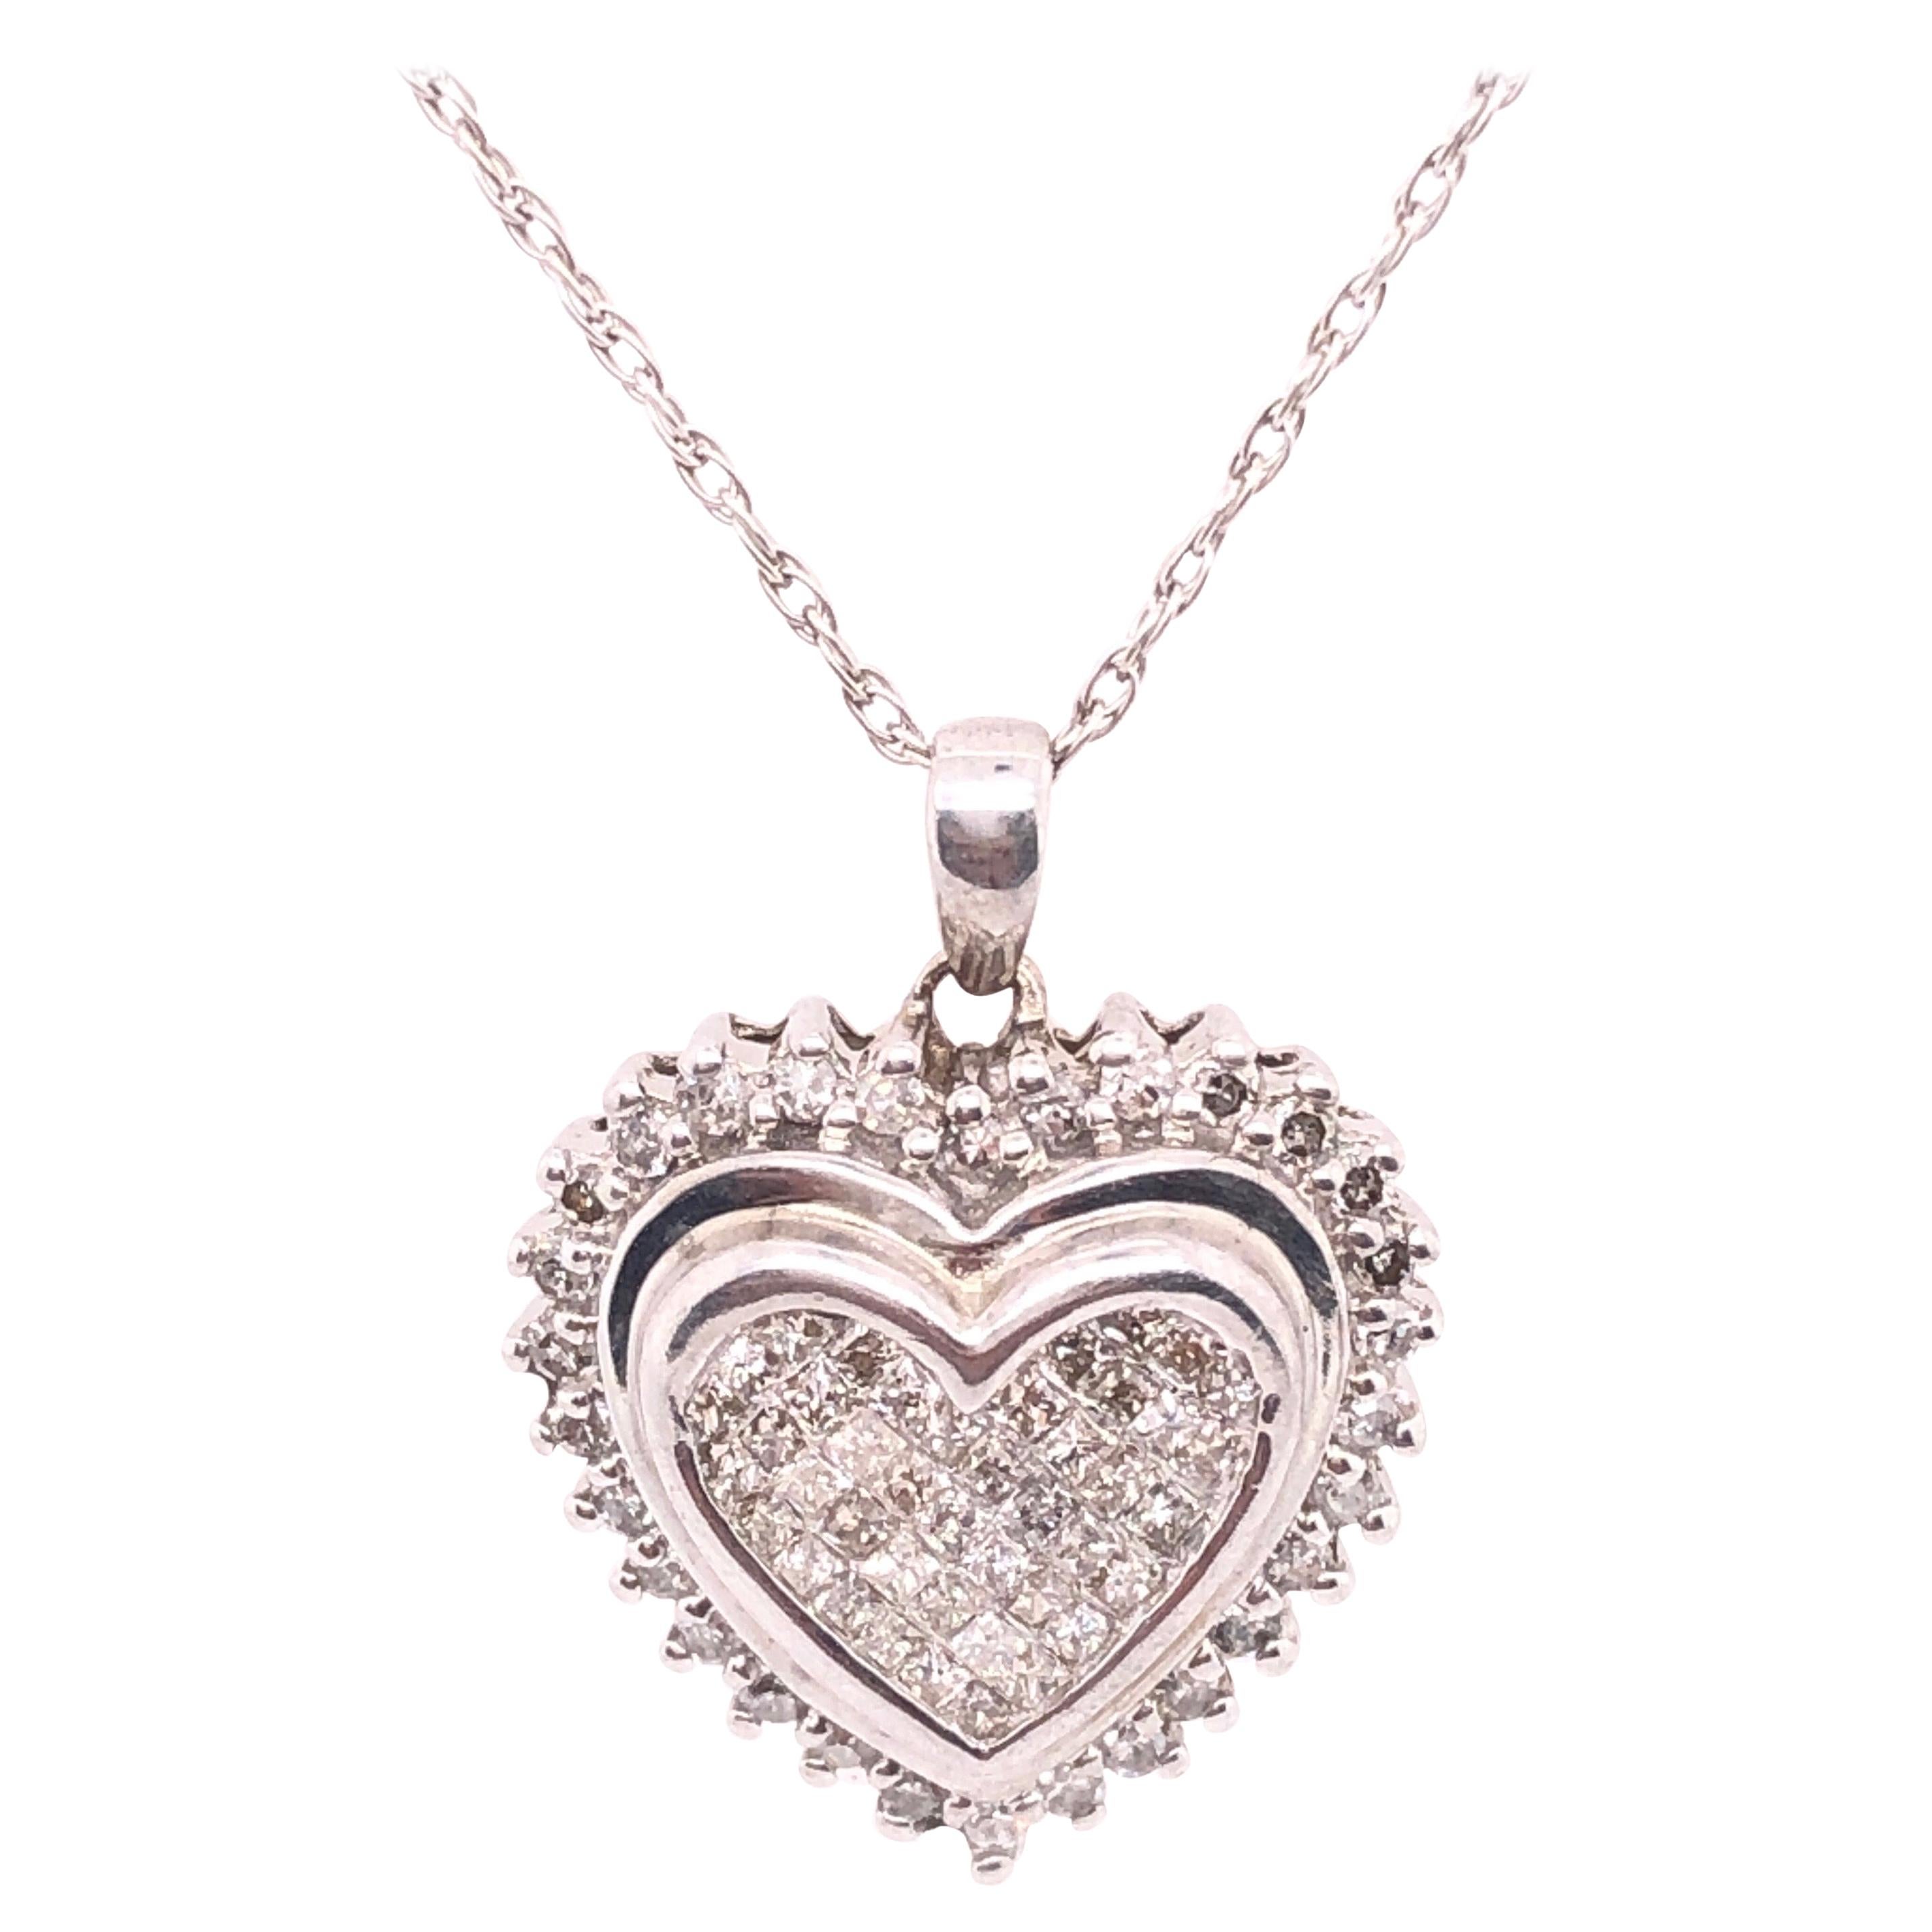 14 Karat White Gold Heart Pendant Necklace with Round Diamonds